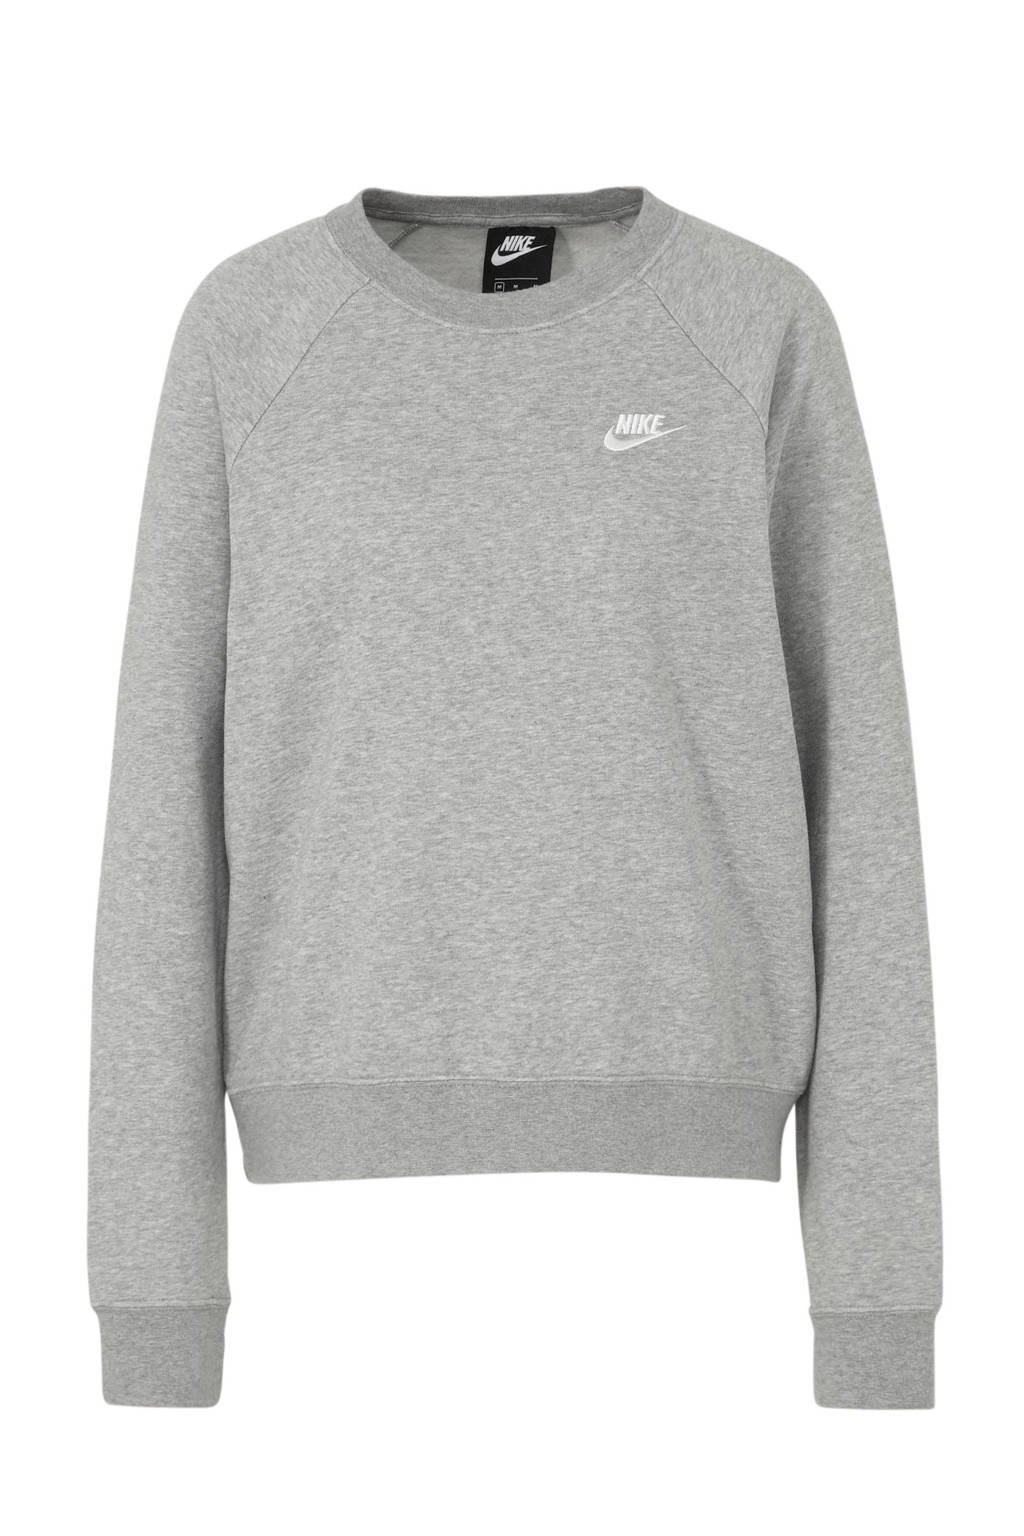 Nike sweater grijs melange, Grijs melange